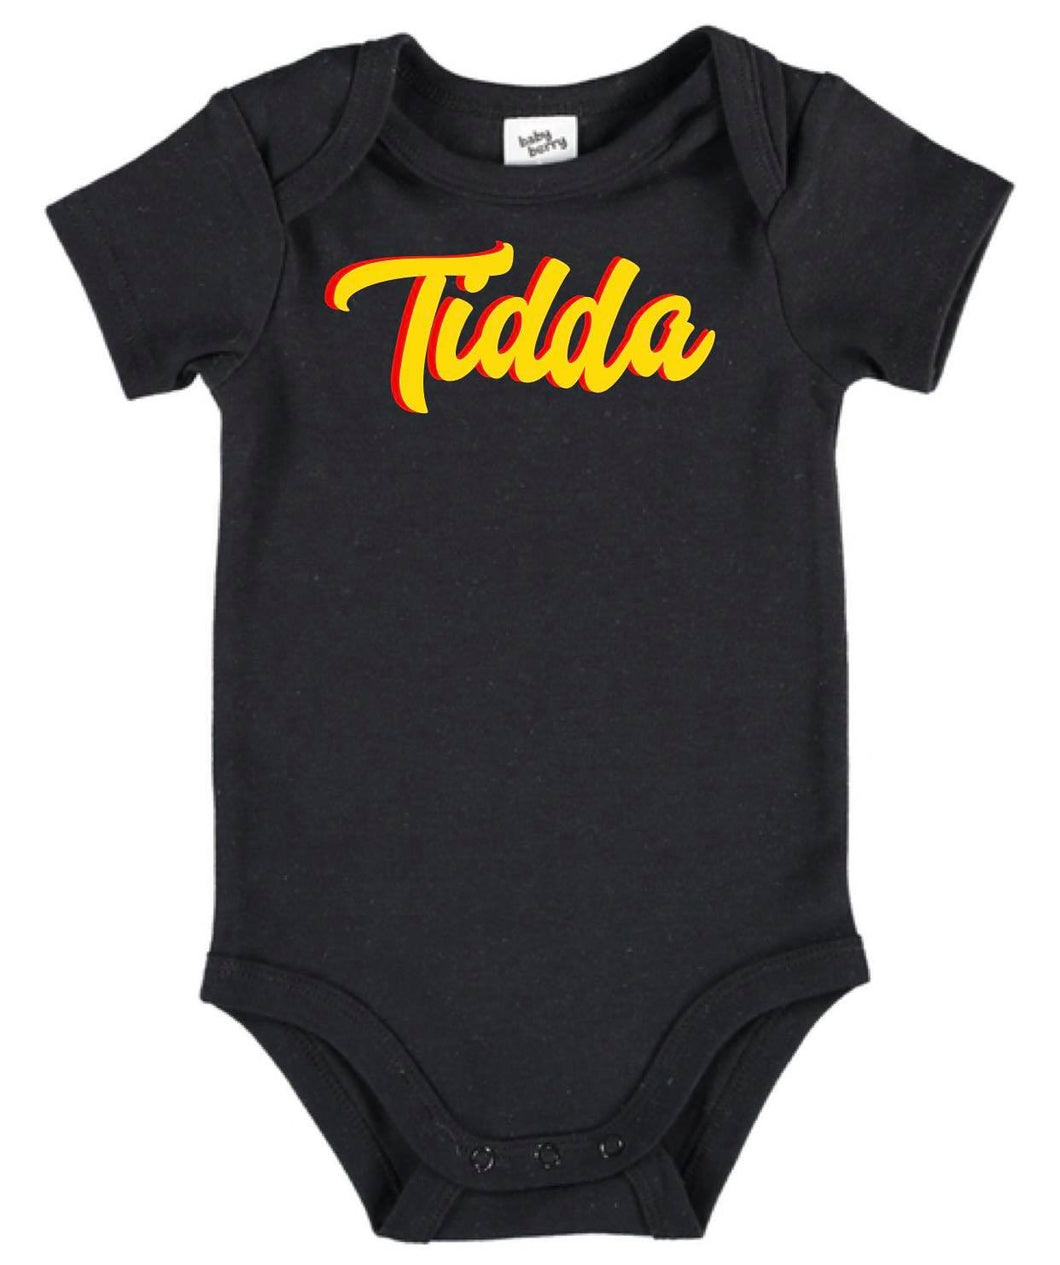 Tidda Onesie Infant